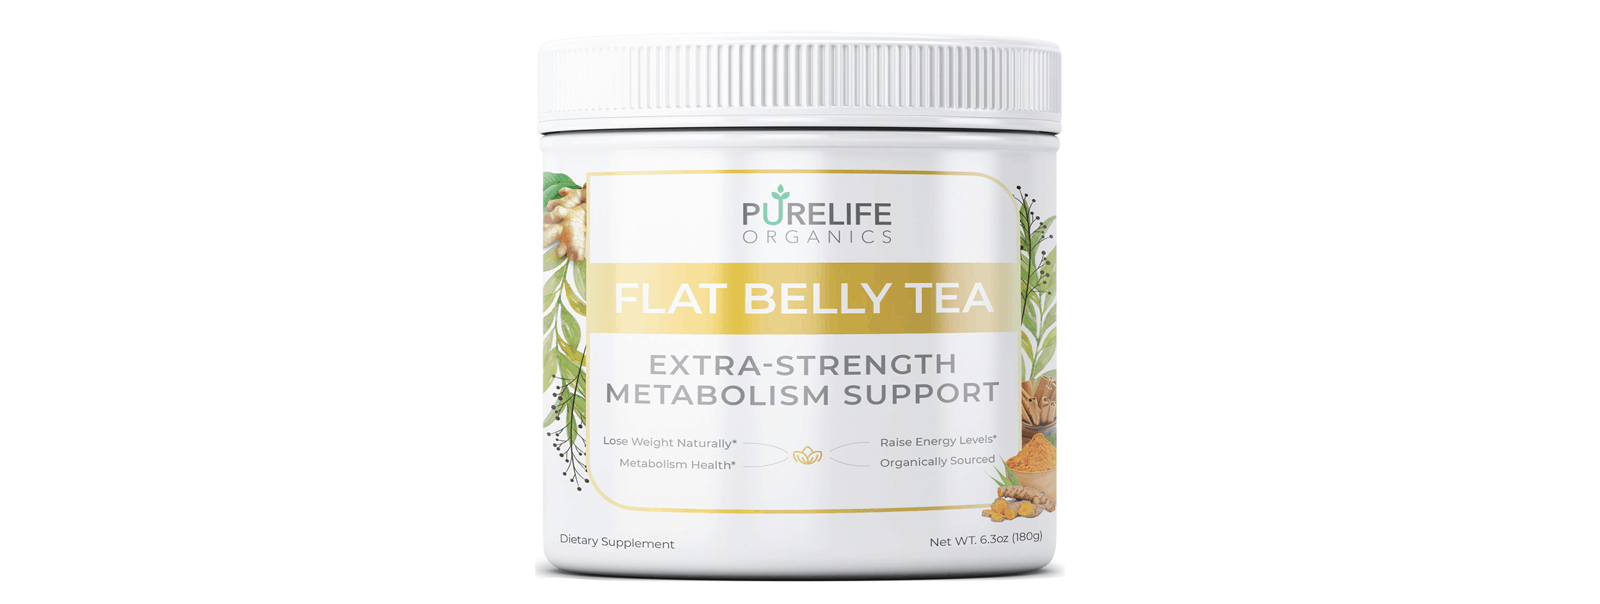 flat belly tea scam